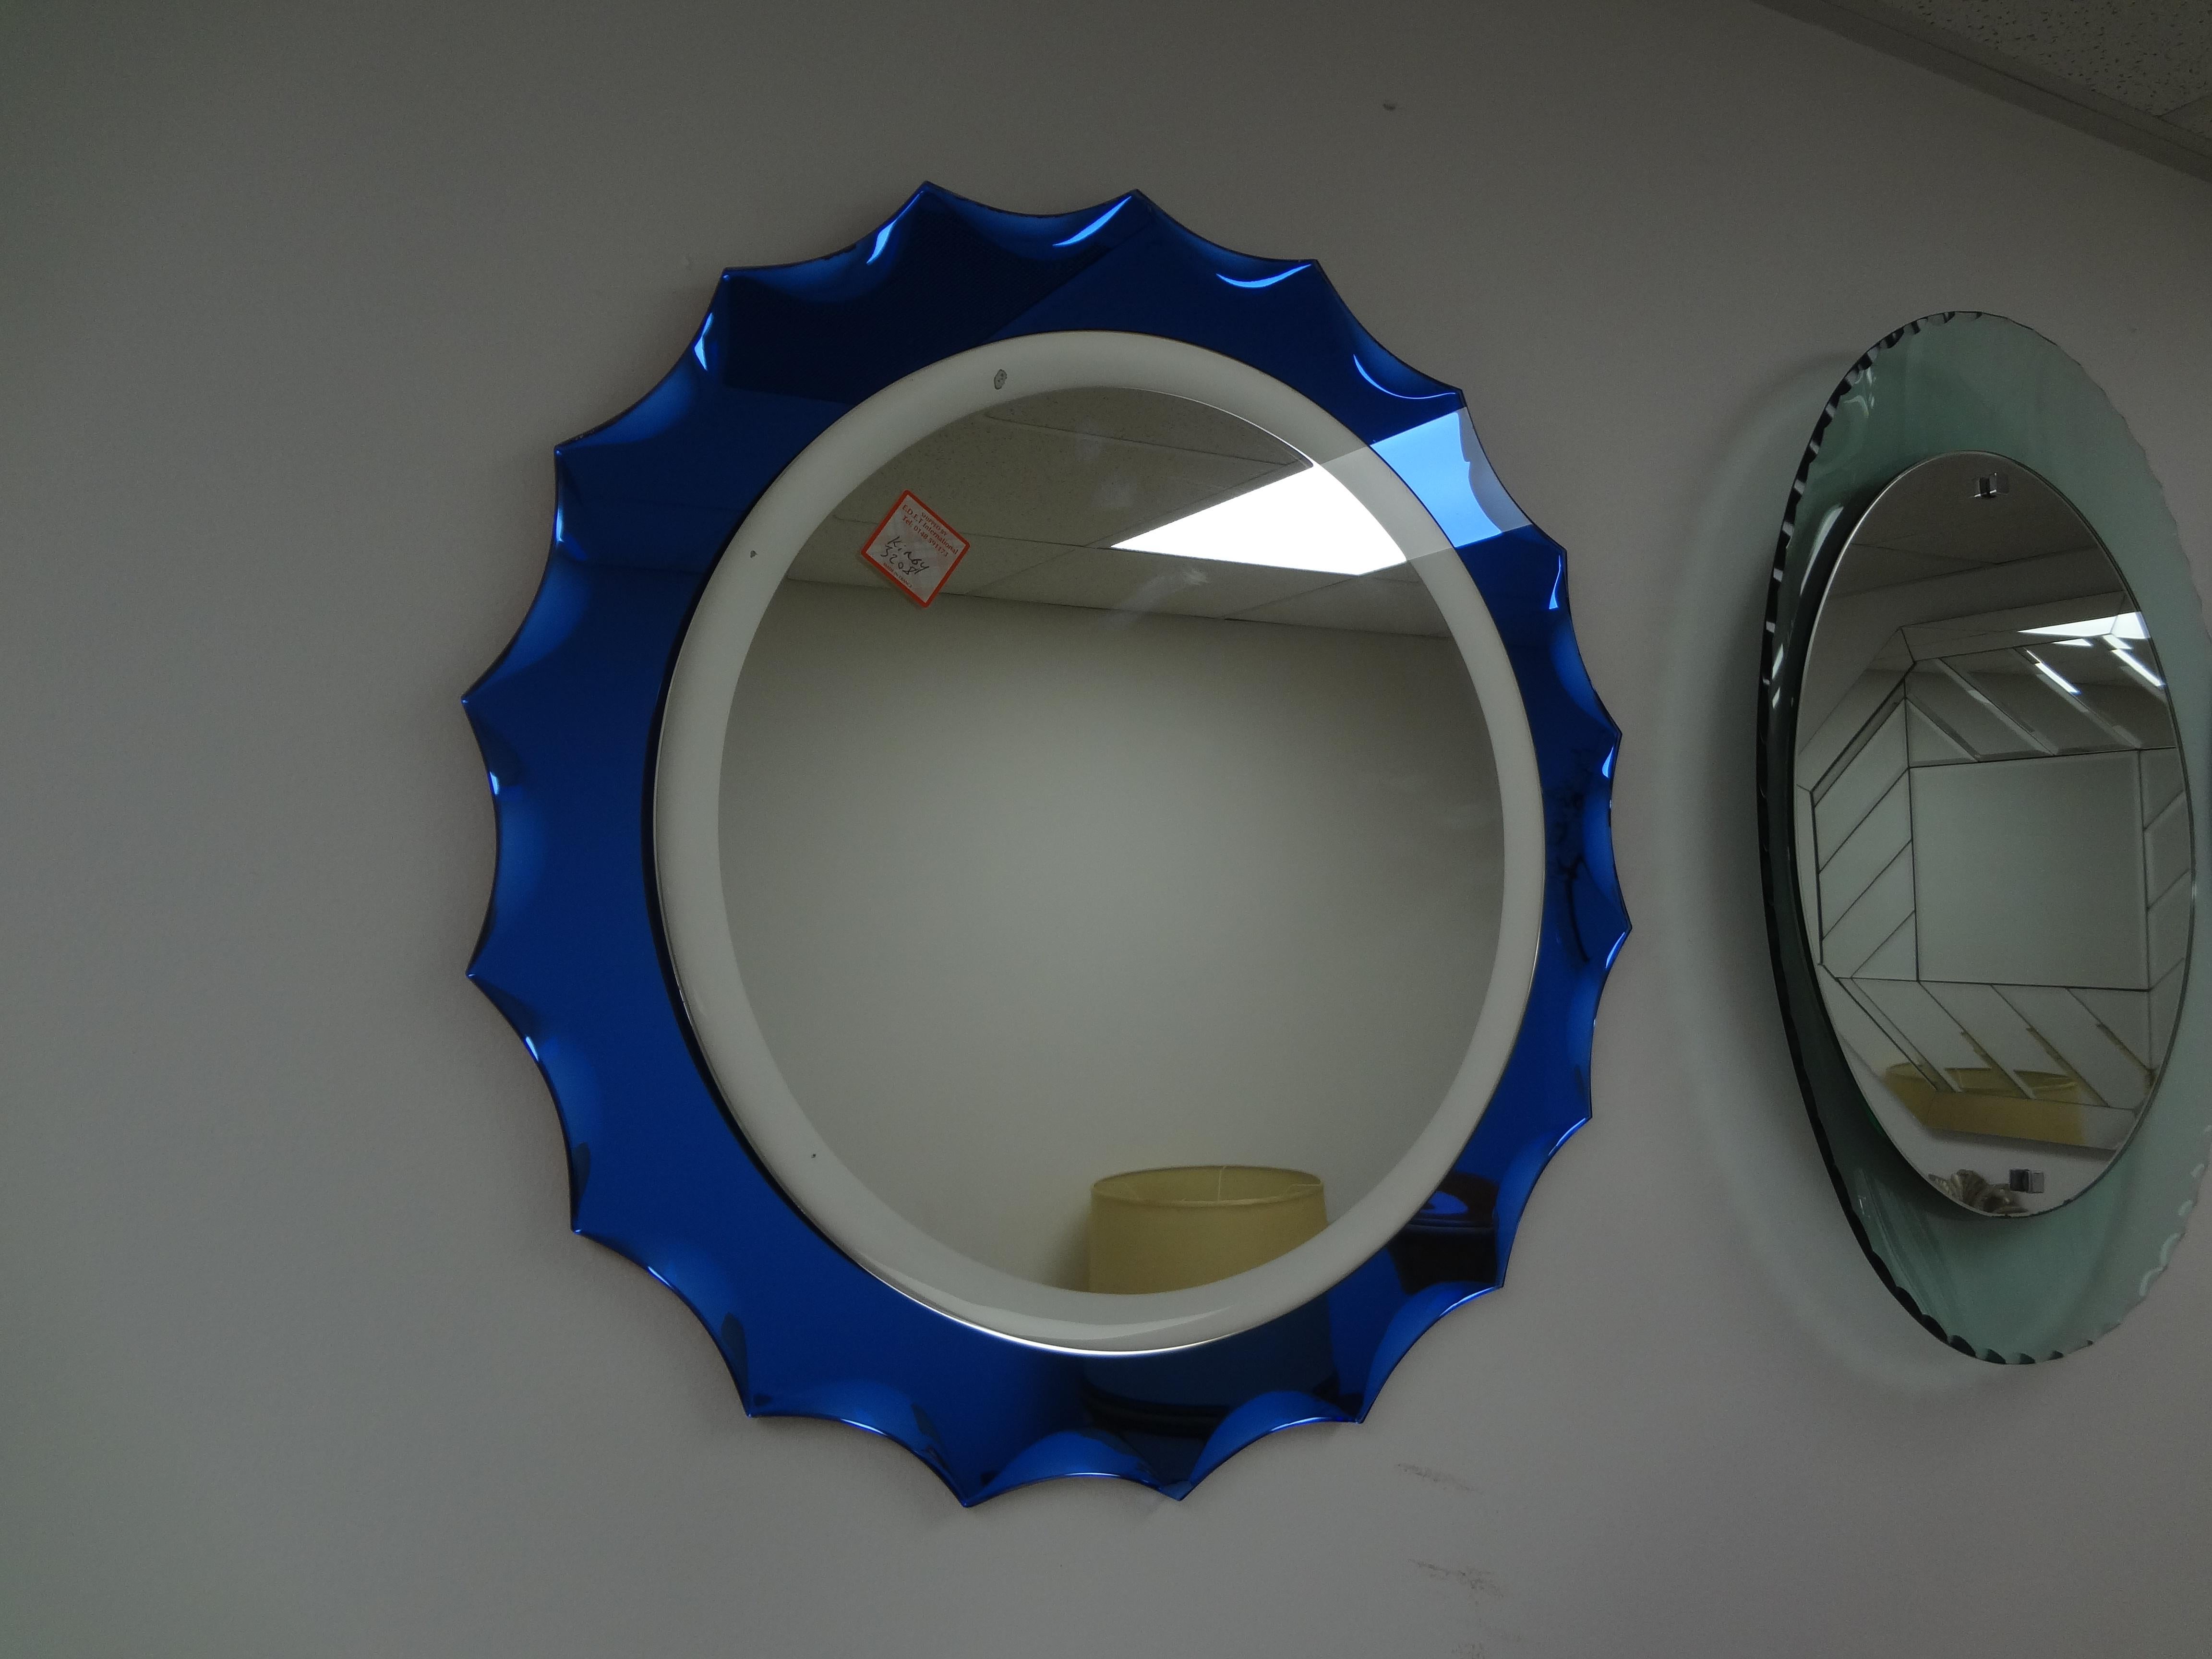 Italian Modern Fontana Arte Inspired Blue Beveled Mirror.
Shapely Italian mid century Fontana Arte inspired beveled mirror. This lovely vintage Italian beveled mirror has a stunning vibrant blue perimeter with a silver oval interior section. 
Great